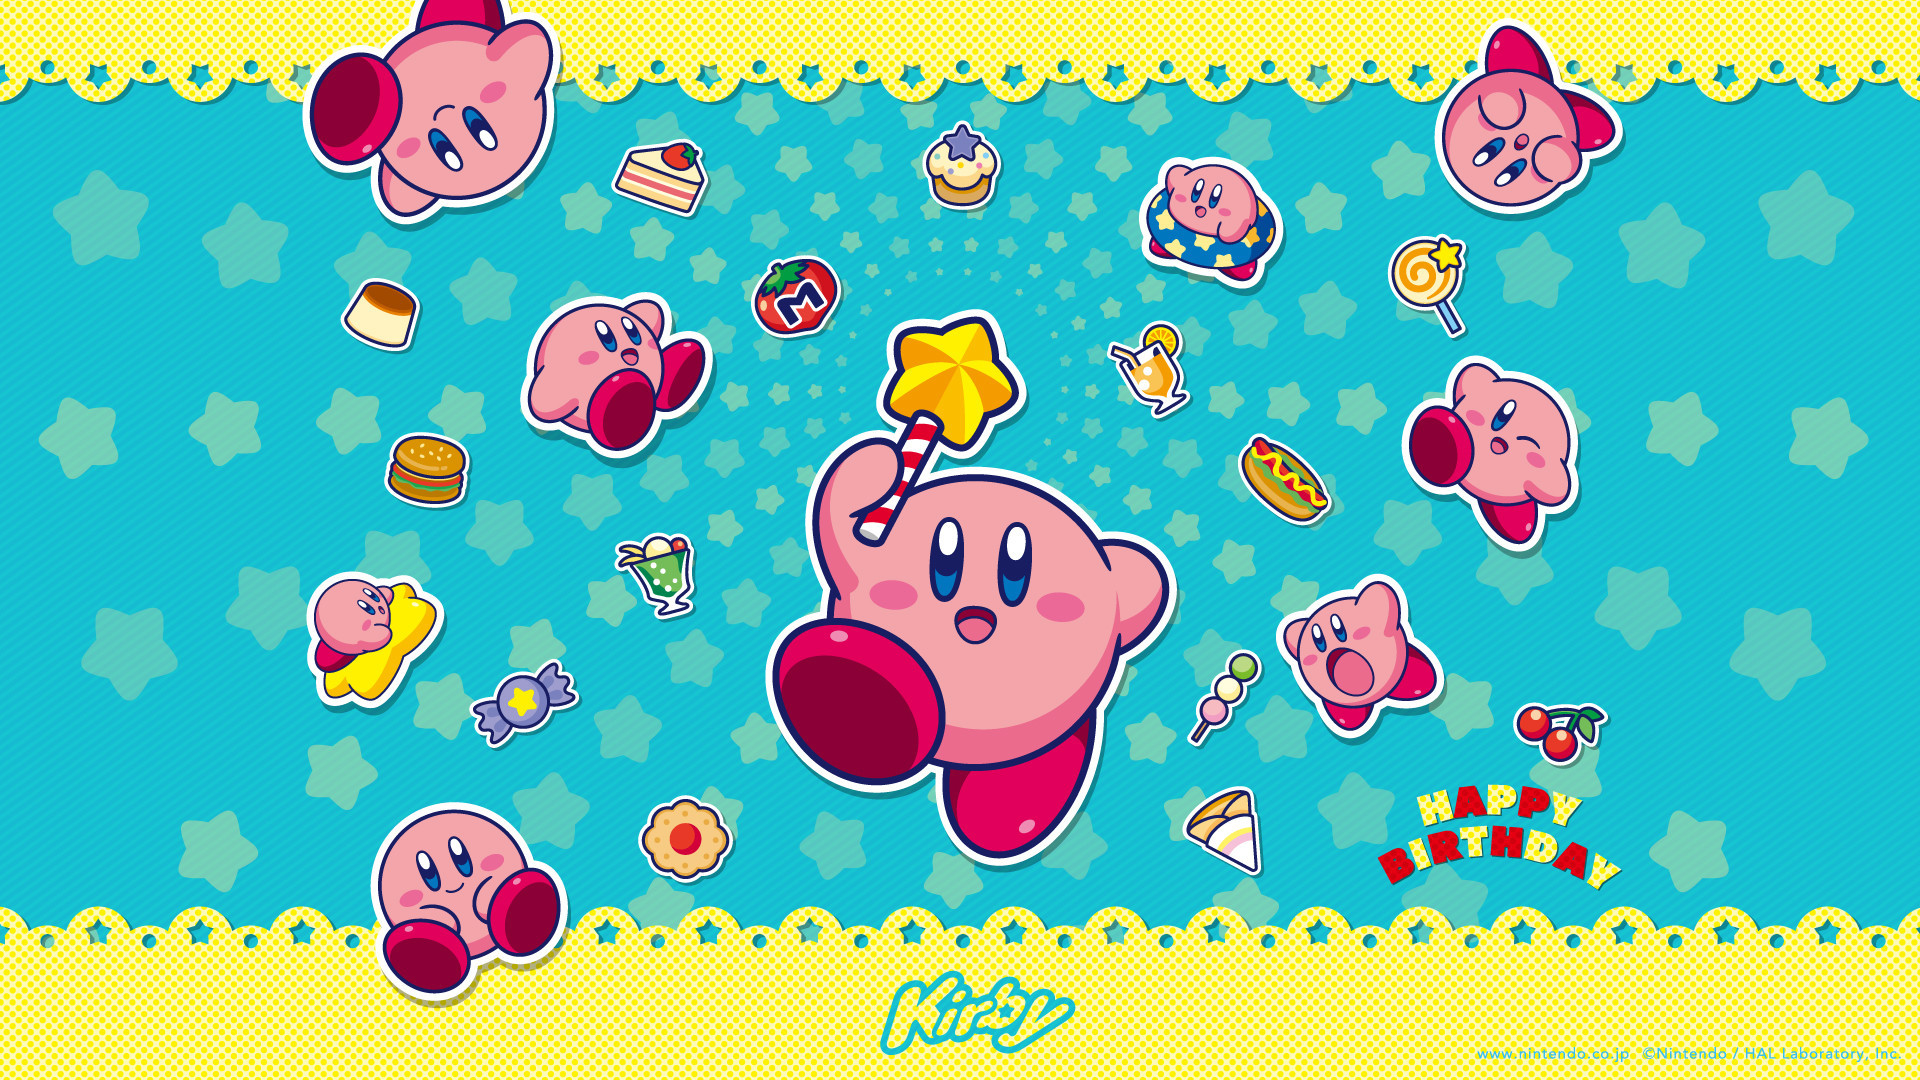 Kirby Wallpaper Image